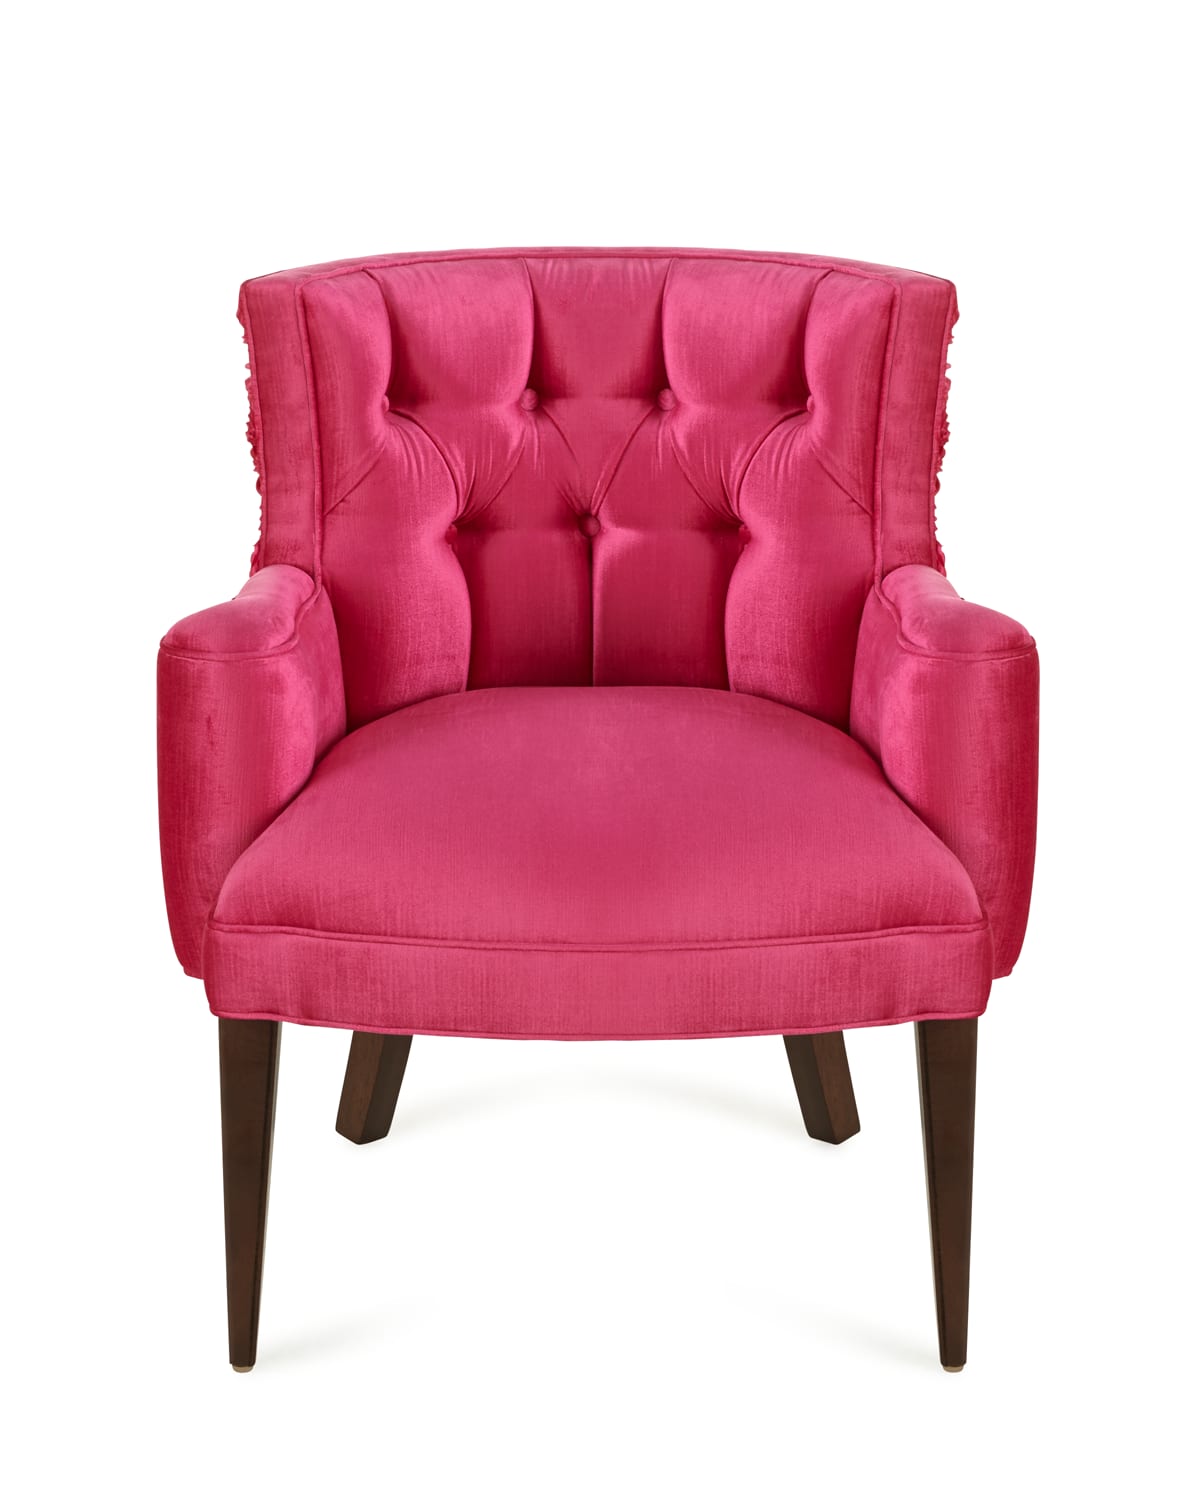 Haute House Tiffany Chair In Fuchsia